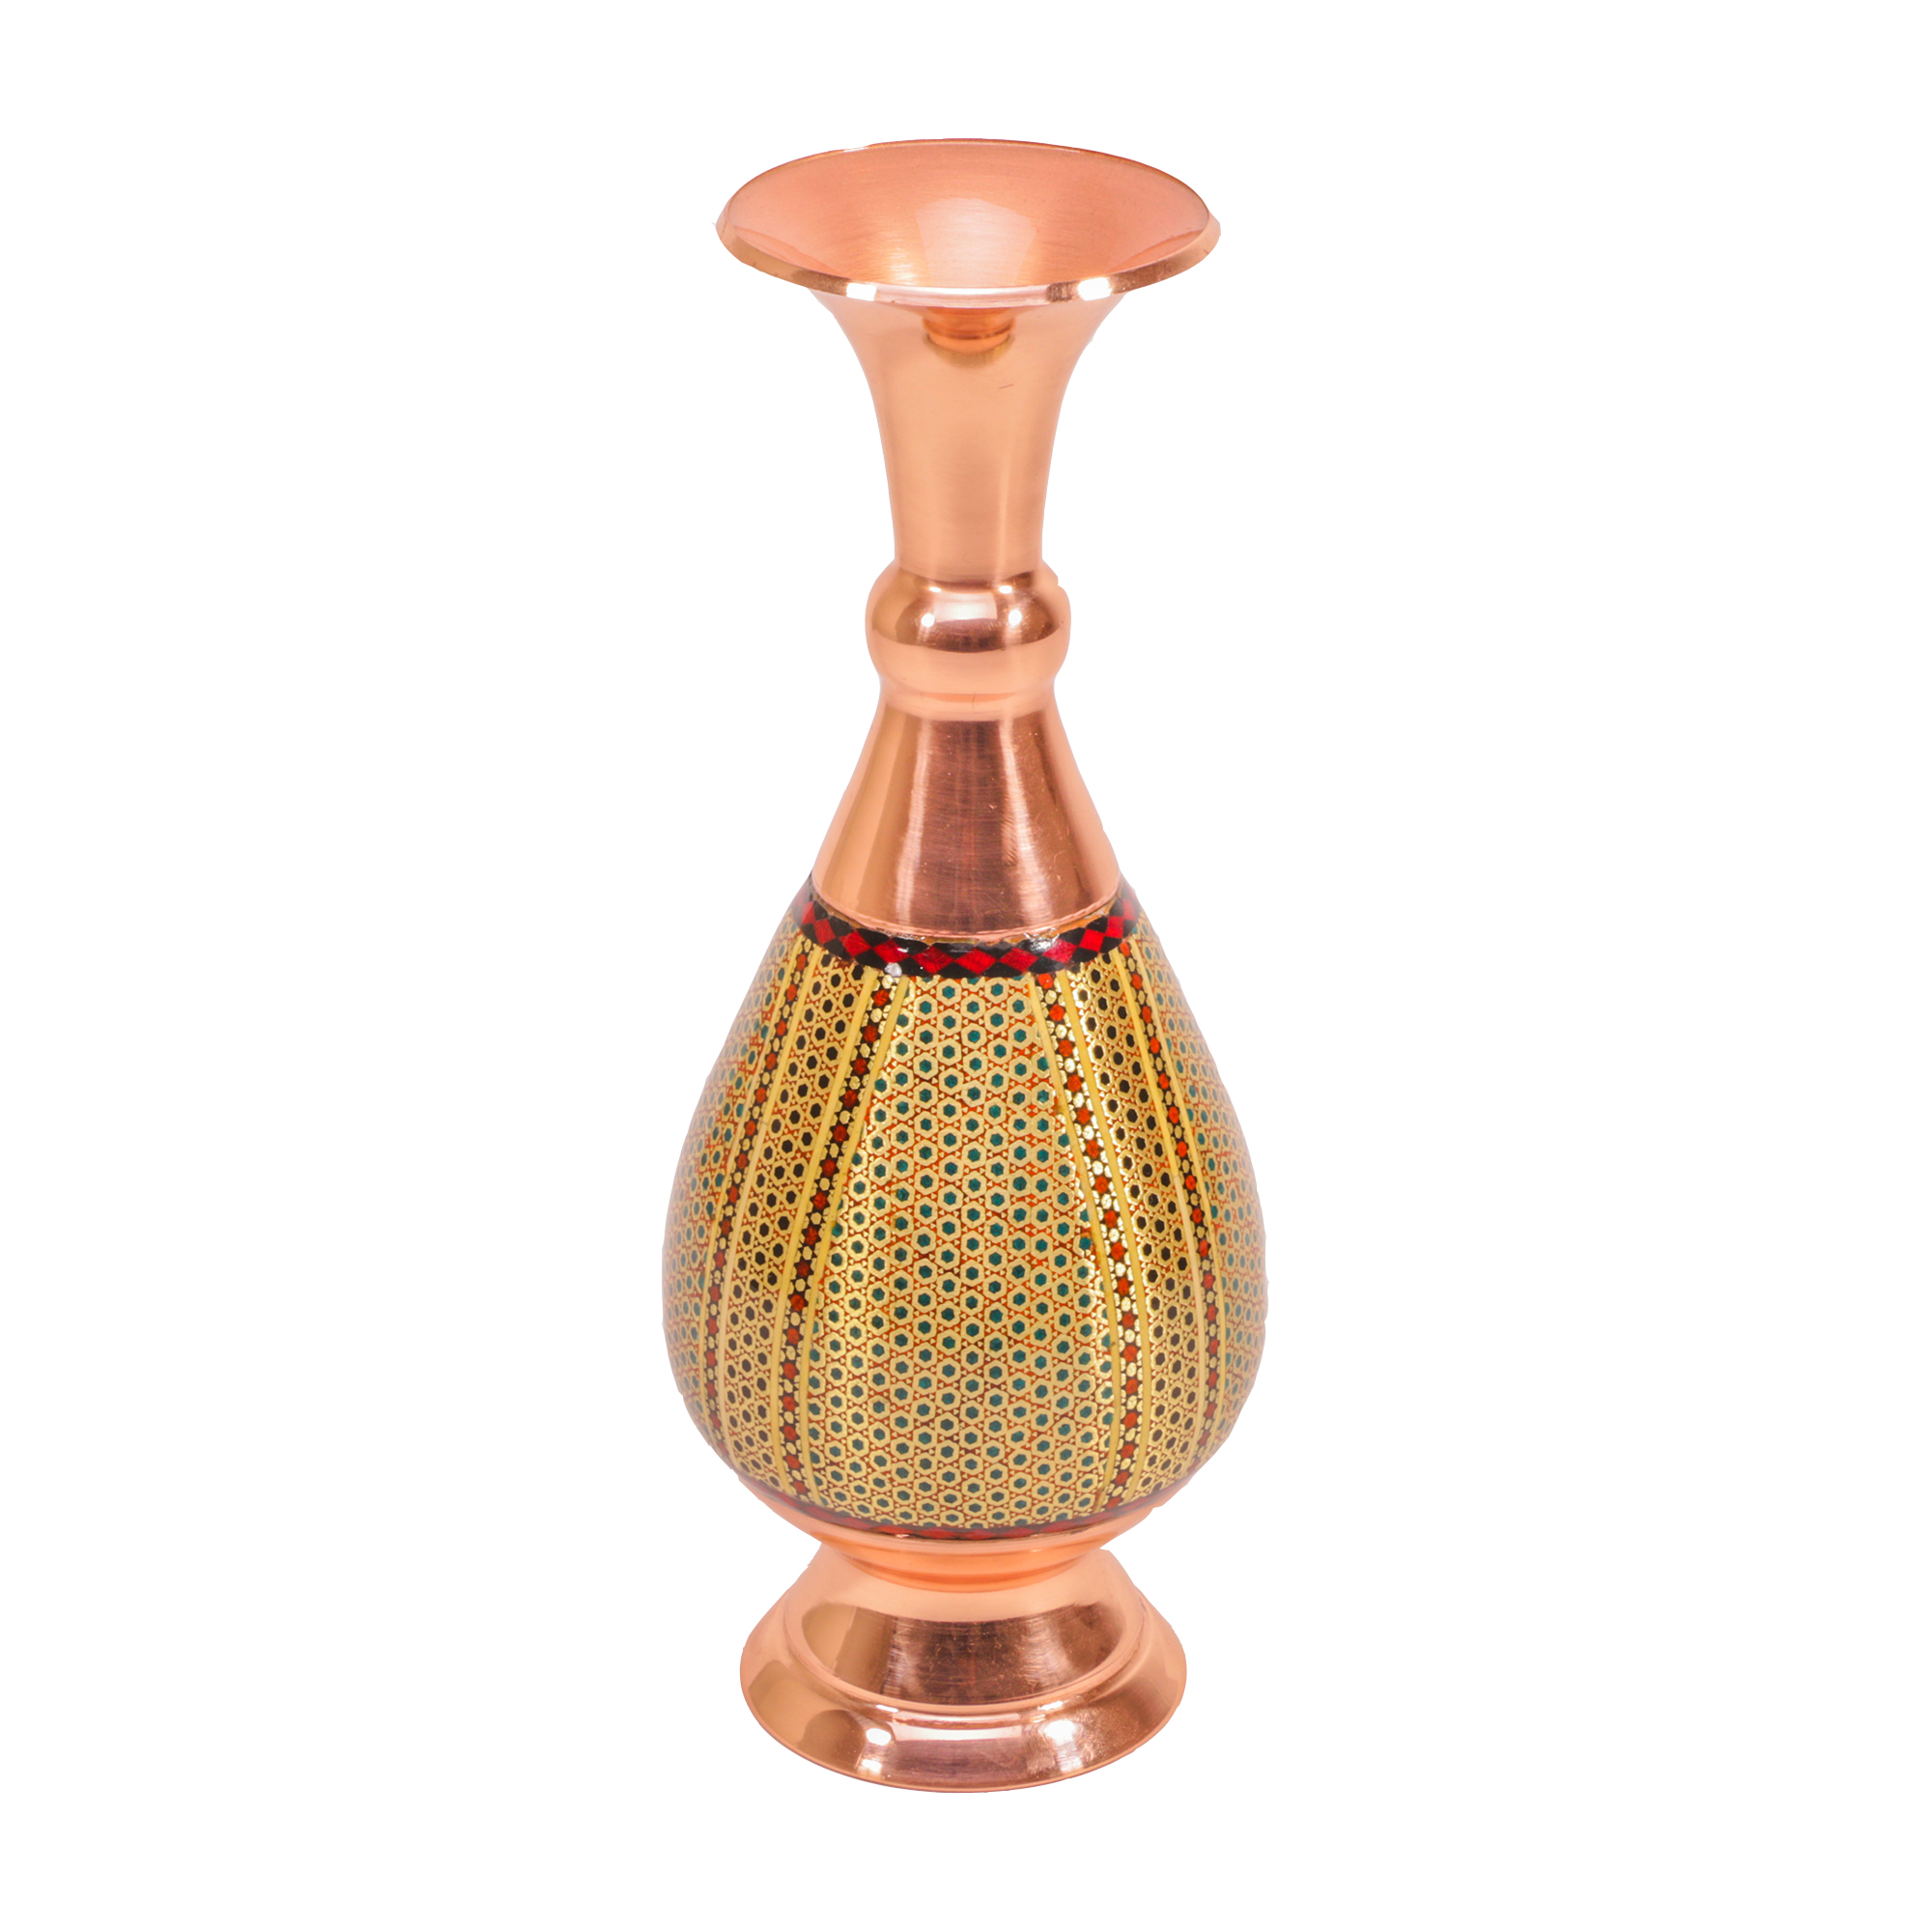 Inlay handicraft Vase of Honarmandan Gallery, copper and inlay model, code 160